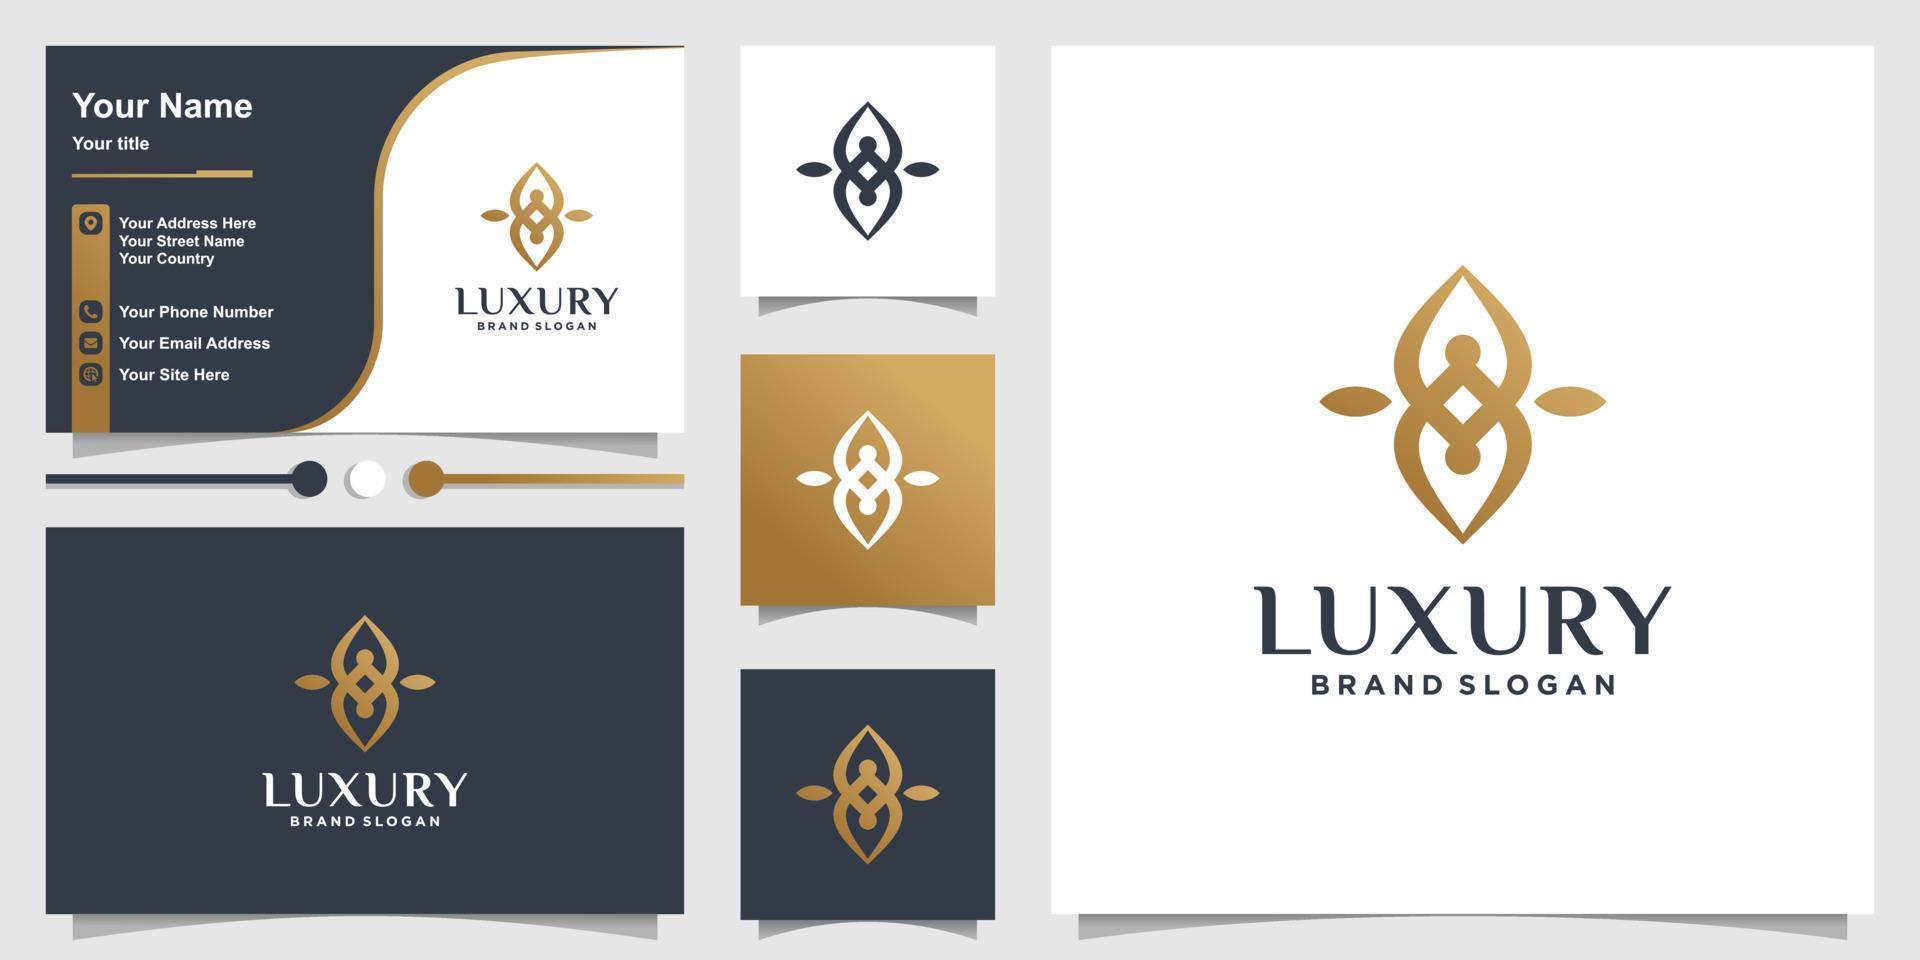 Luxus abstrakte Logo-Vorlage Premium-Vektor vektor